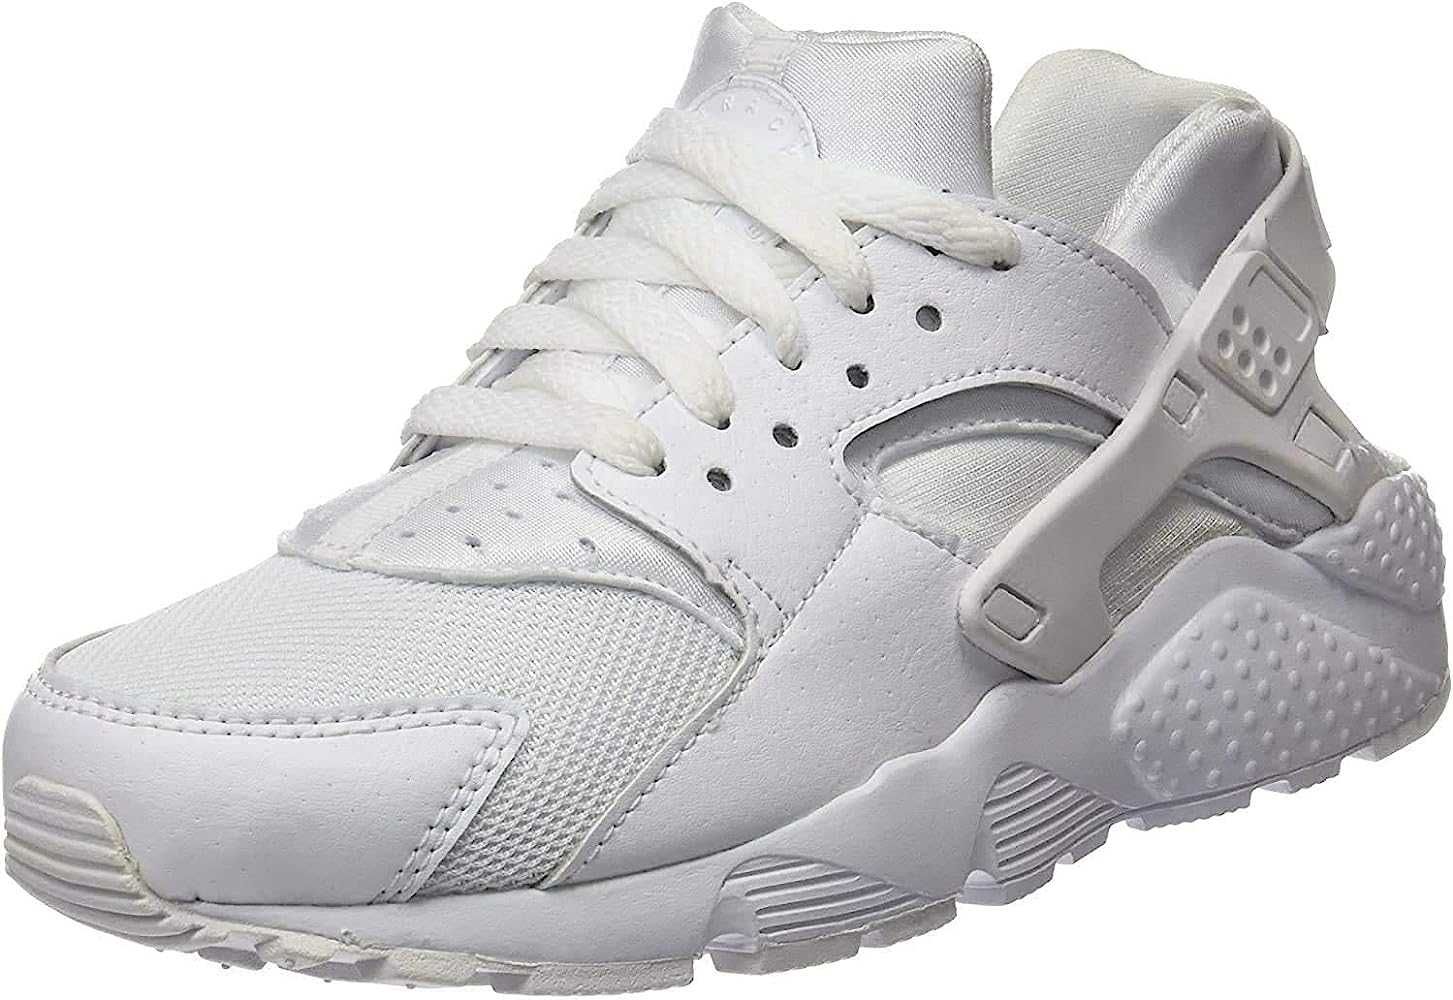 Кроссовки Nike Huarache Casual Running Shoes! Новые в коробке!